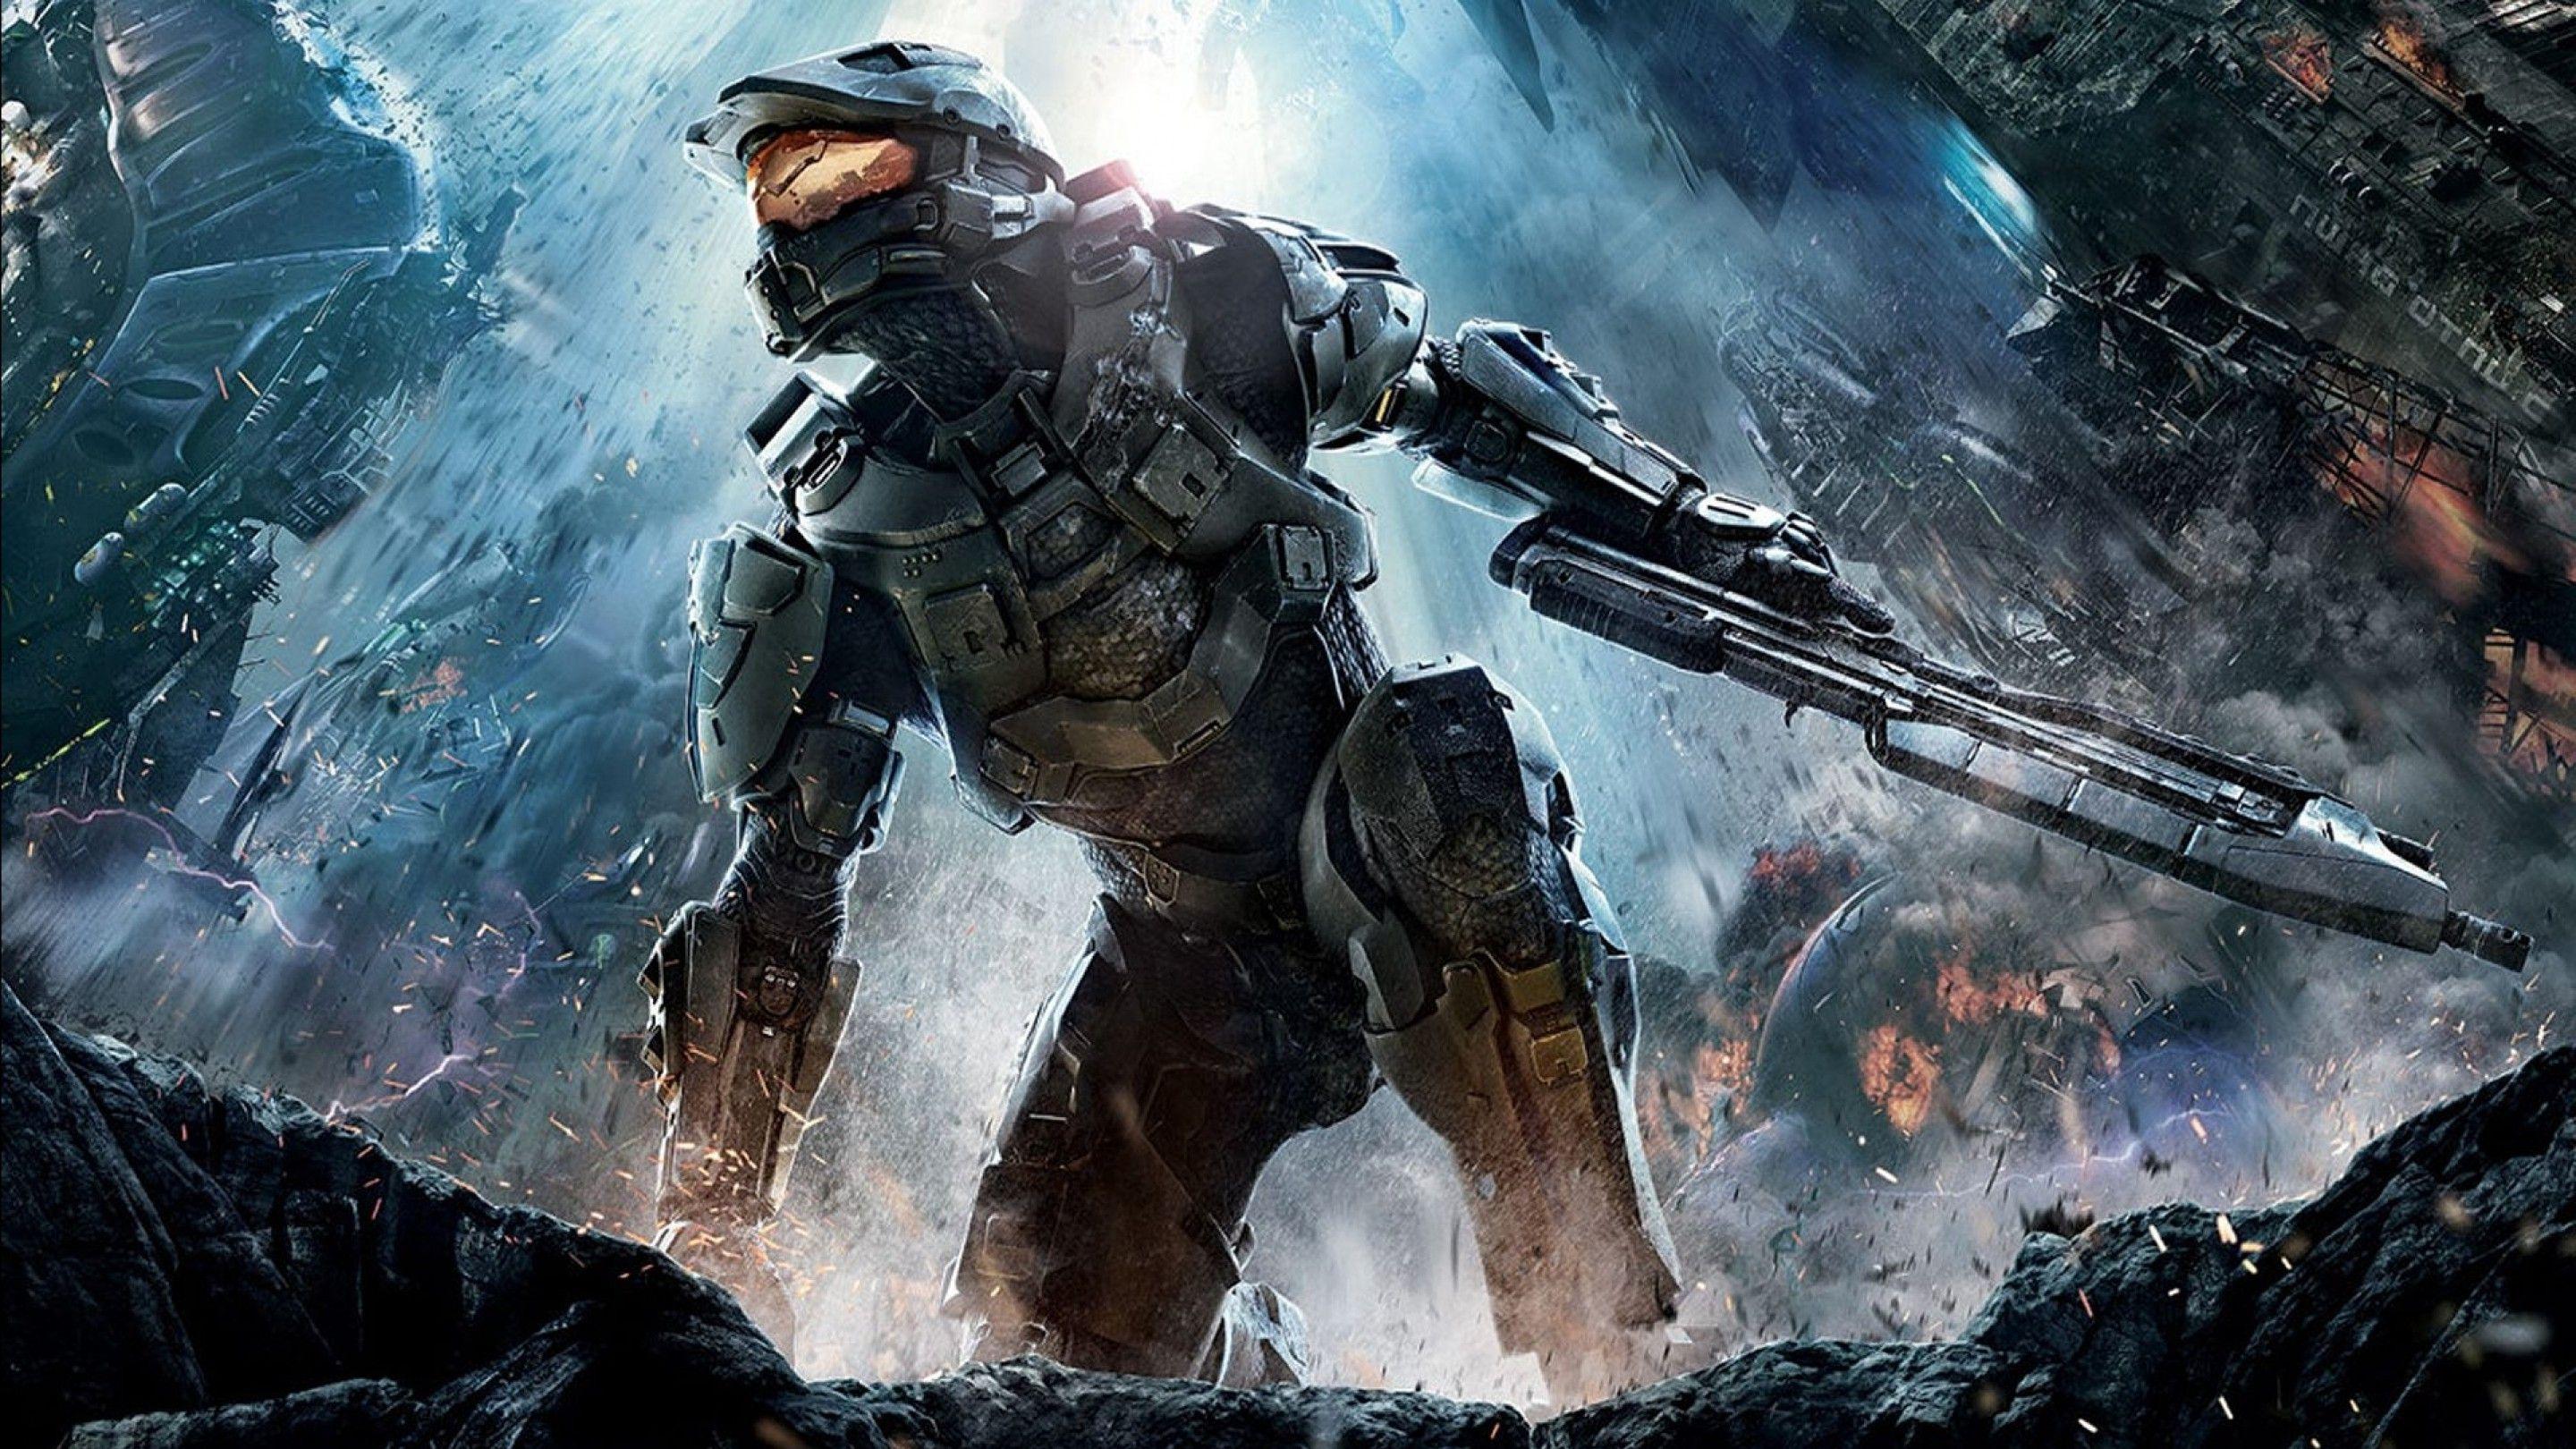 Halo 4 Xbox 360 Game wallpaper (11 Wallpaper)